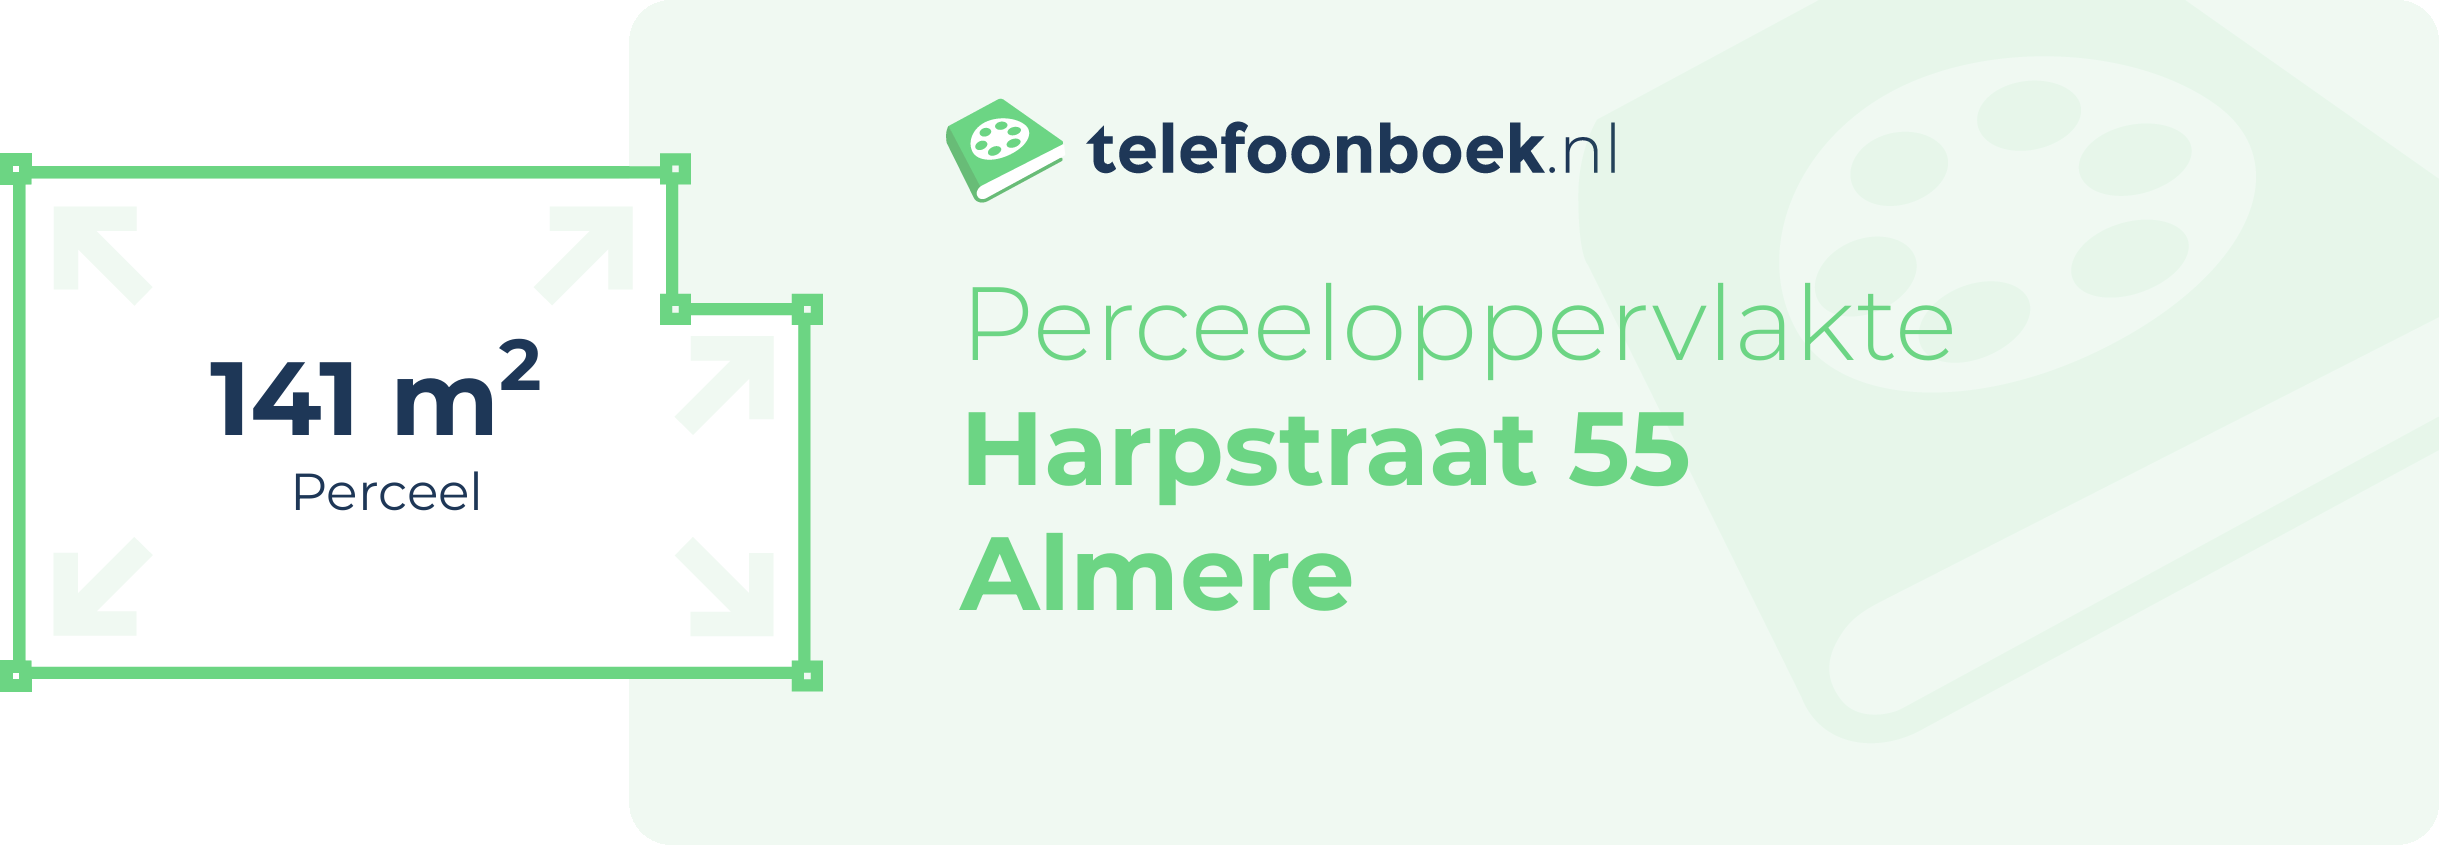 Perceeloppervlakte Harpstraat 55 Almere